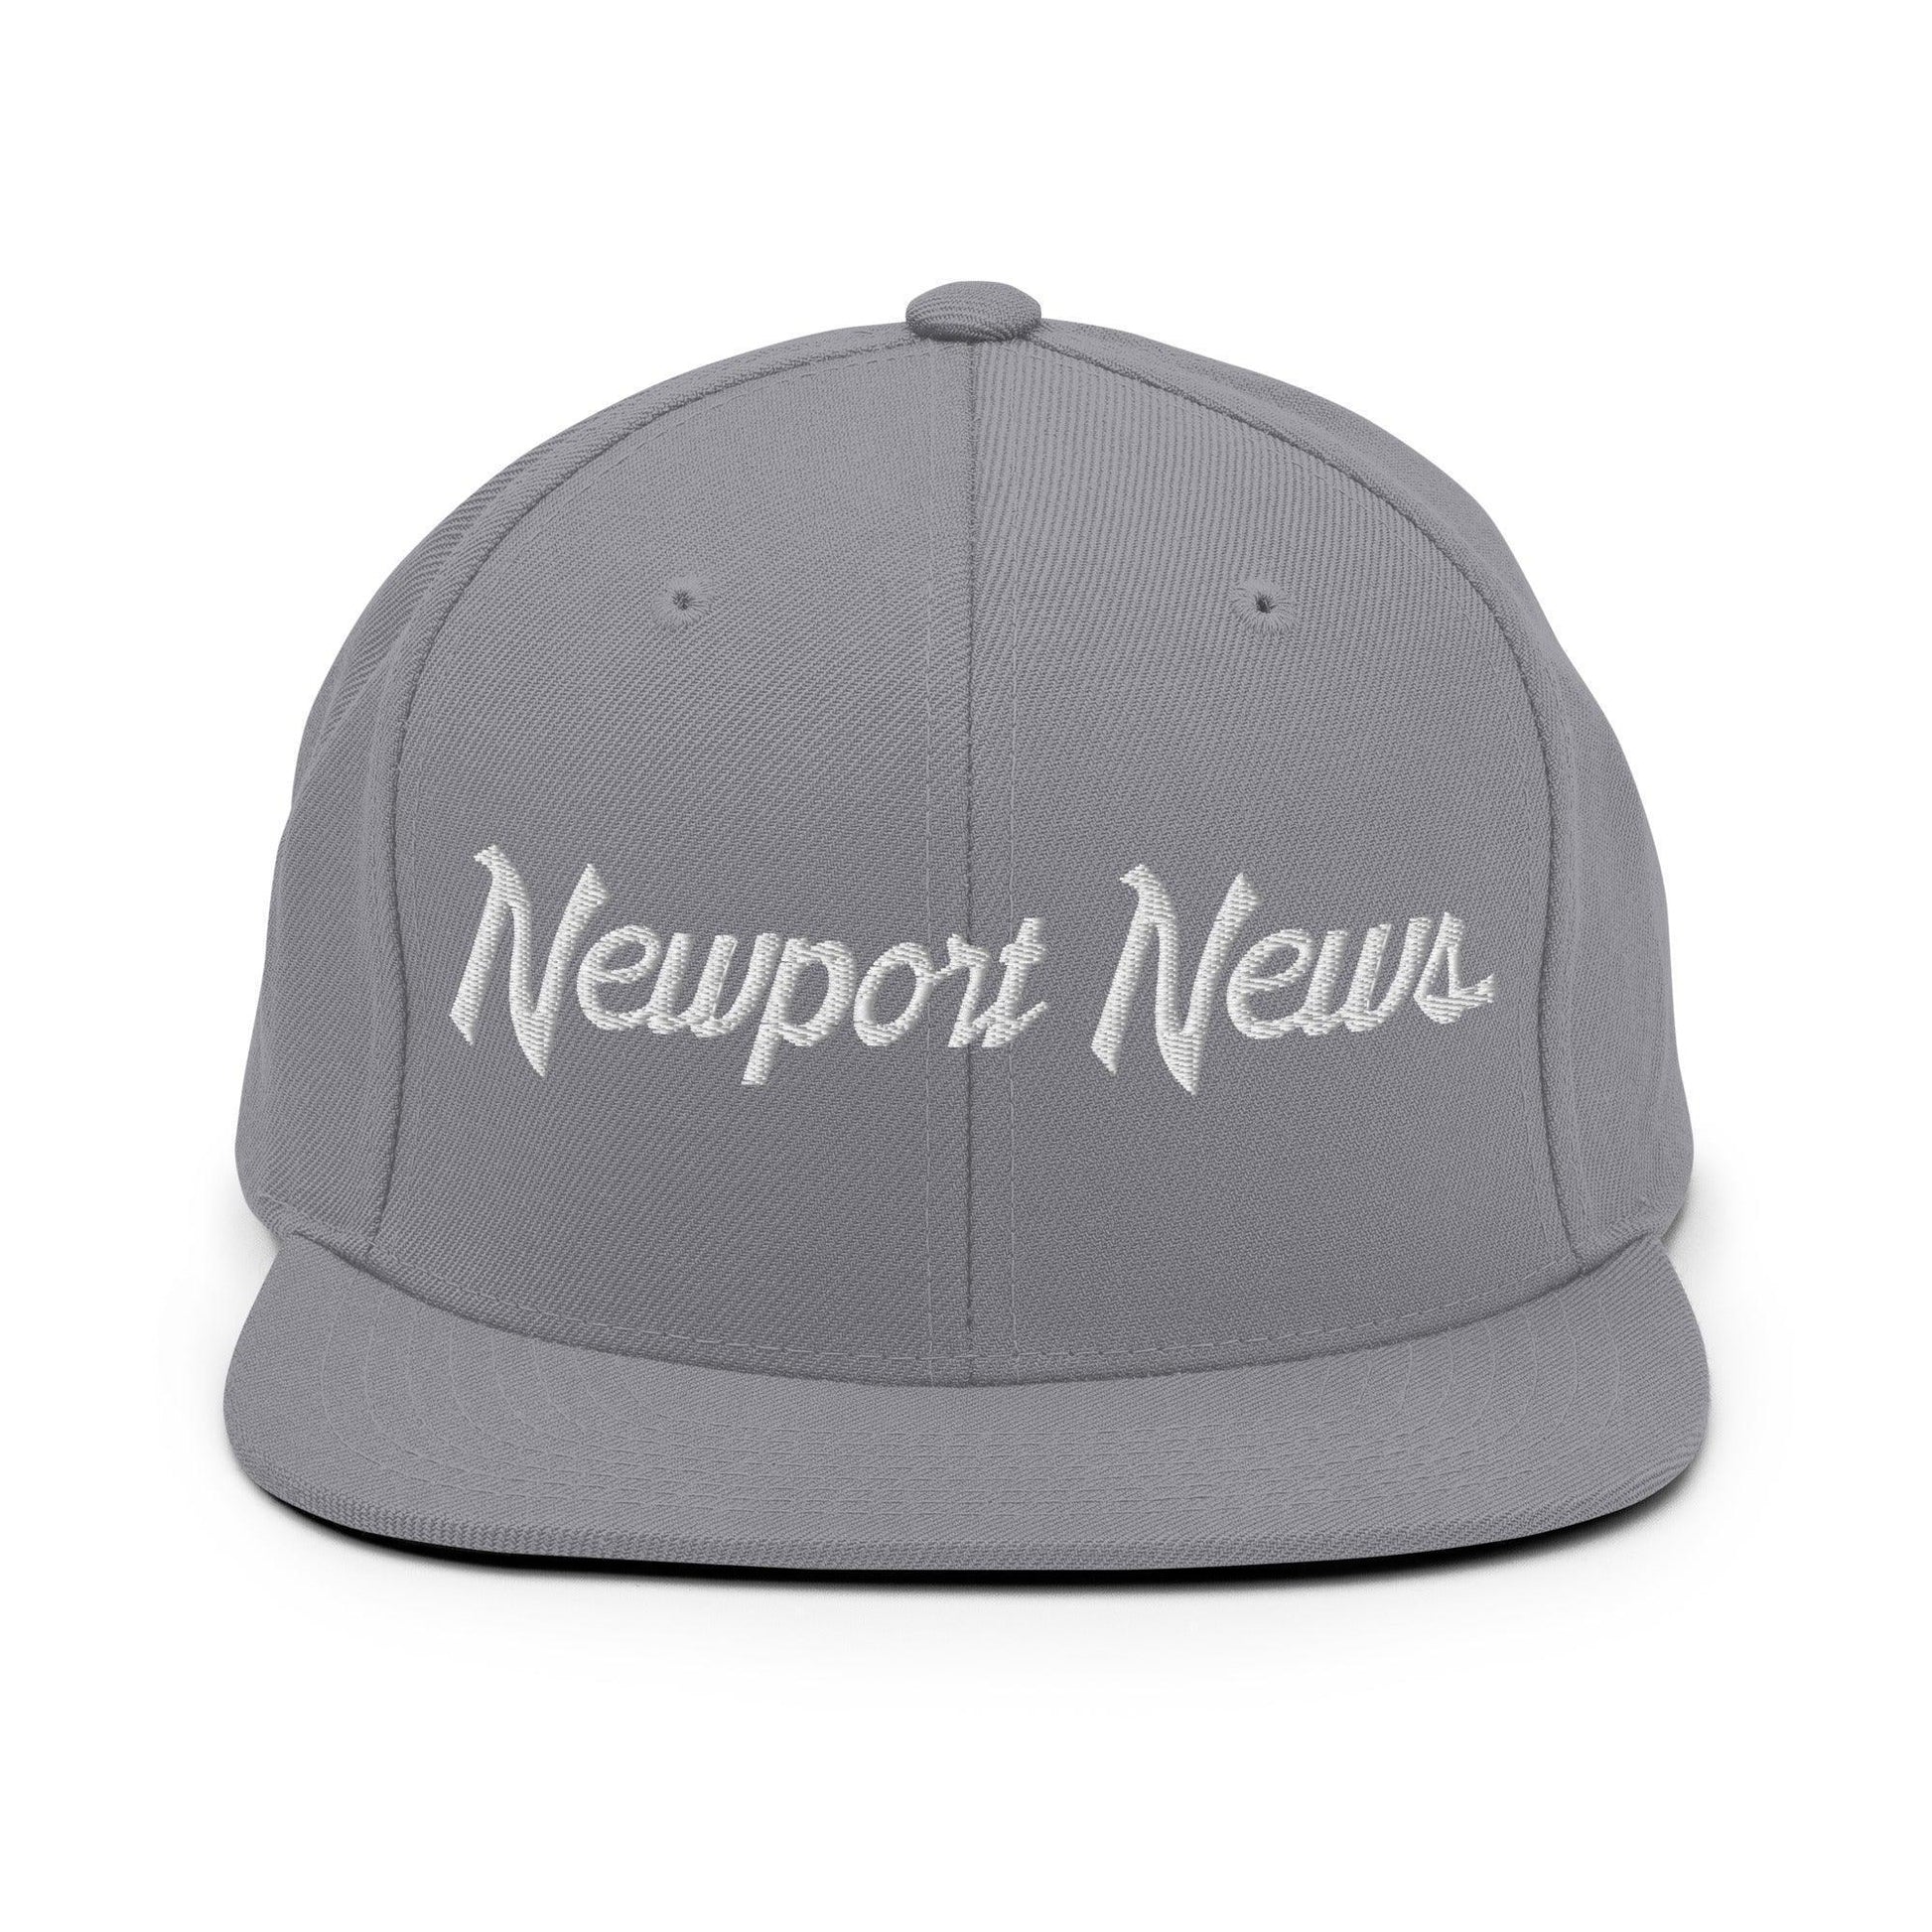 Newport News Script Snapback Hat Silver